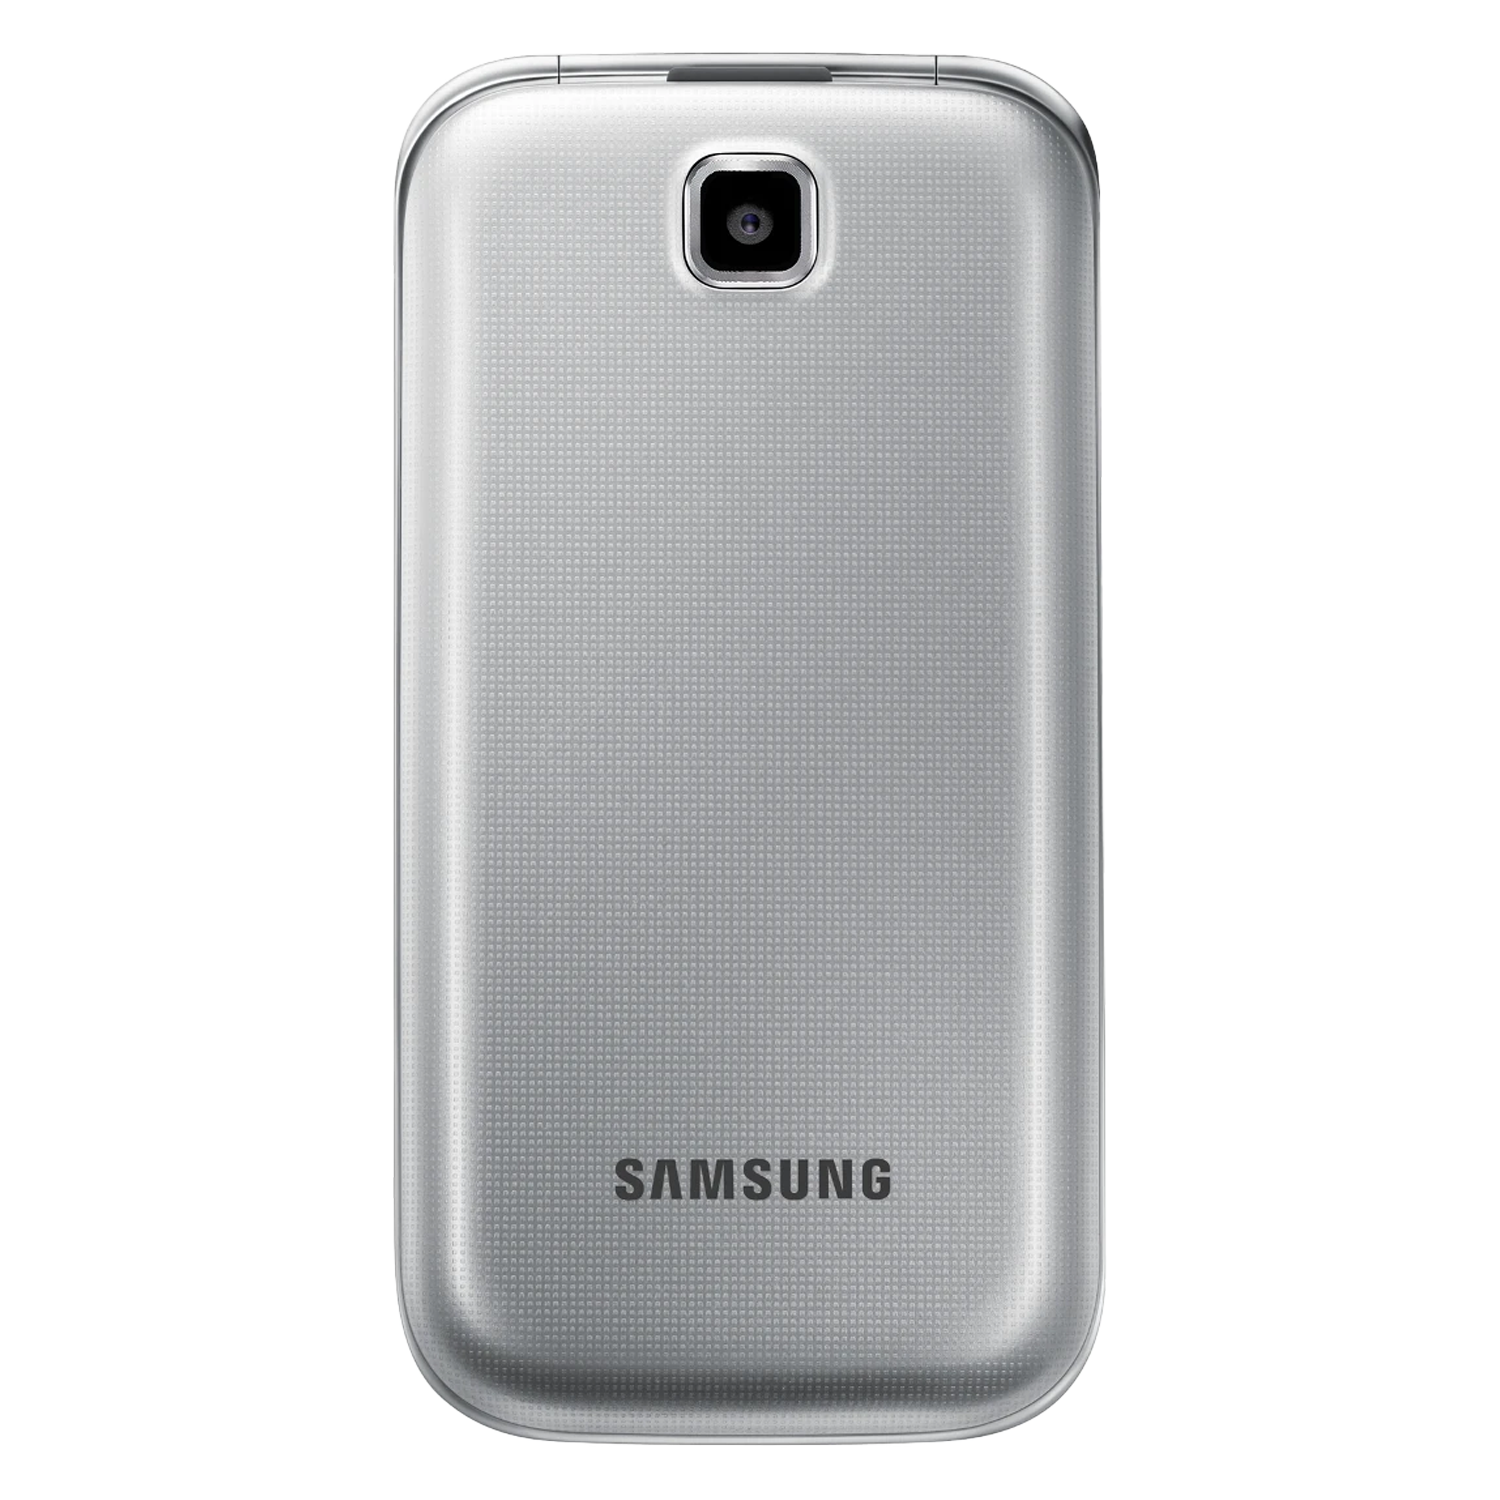 Celular Samsung GT-C3592 Flip Dual SIM Tela 2.4" - Prata	
